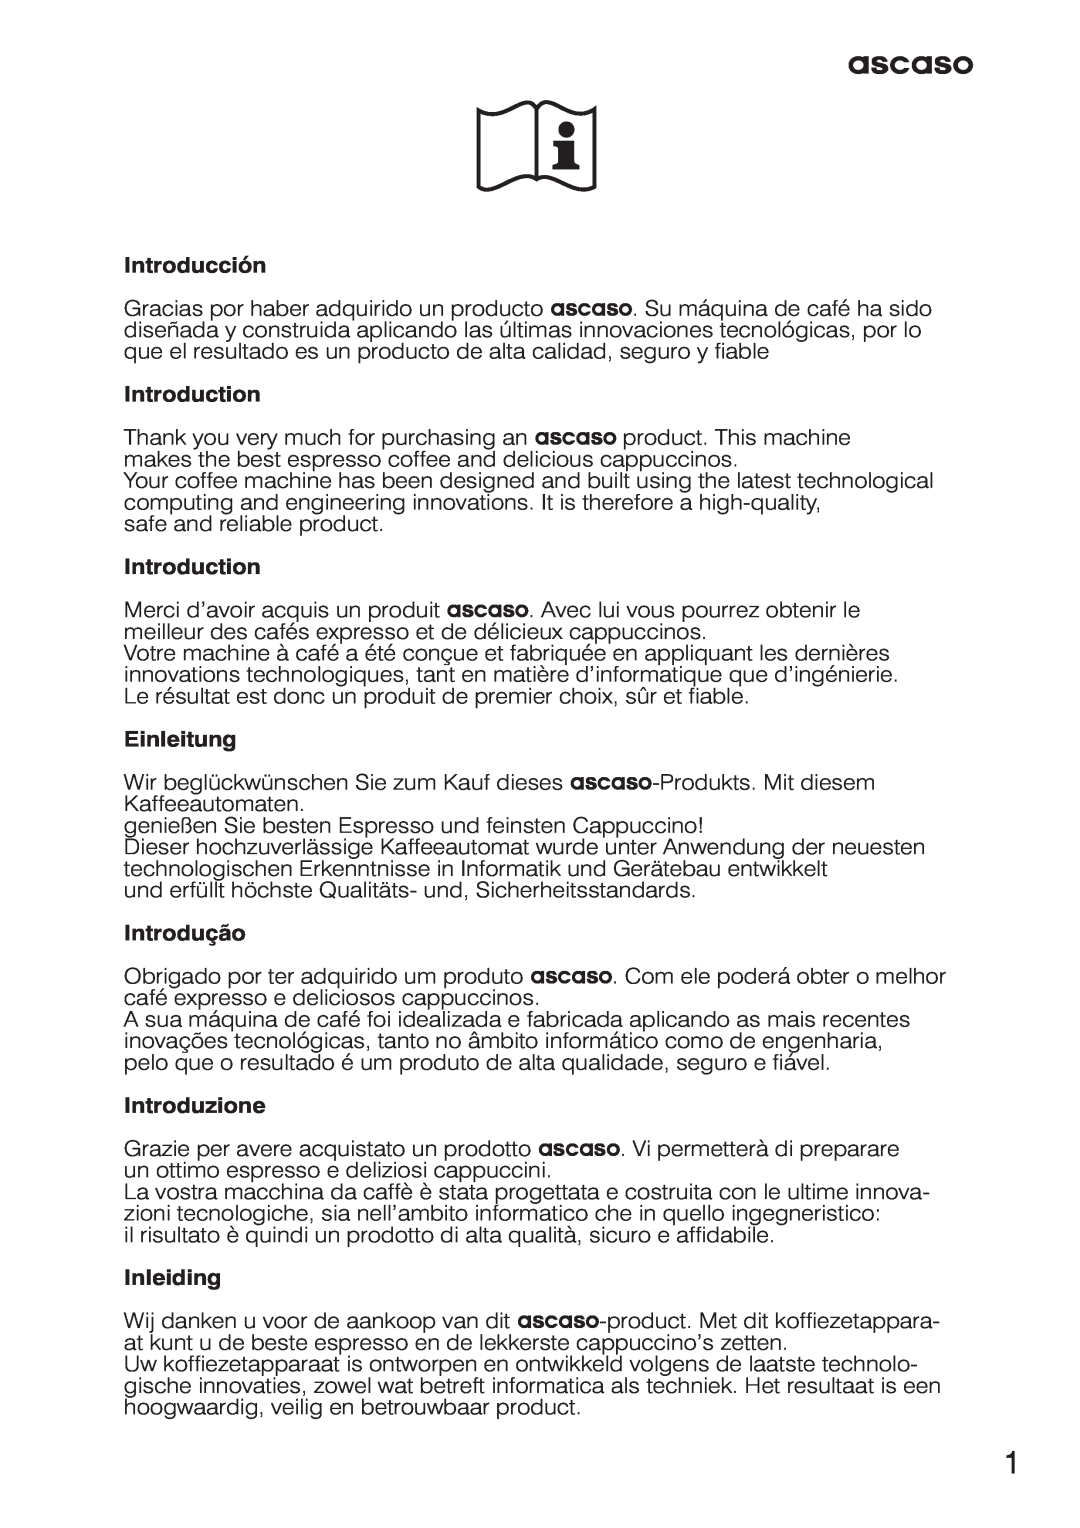 Ascaso Factory Professional System user manual Introducción, Introduction, Einleitung, Introdução, Introduzione, Inleiding 